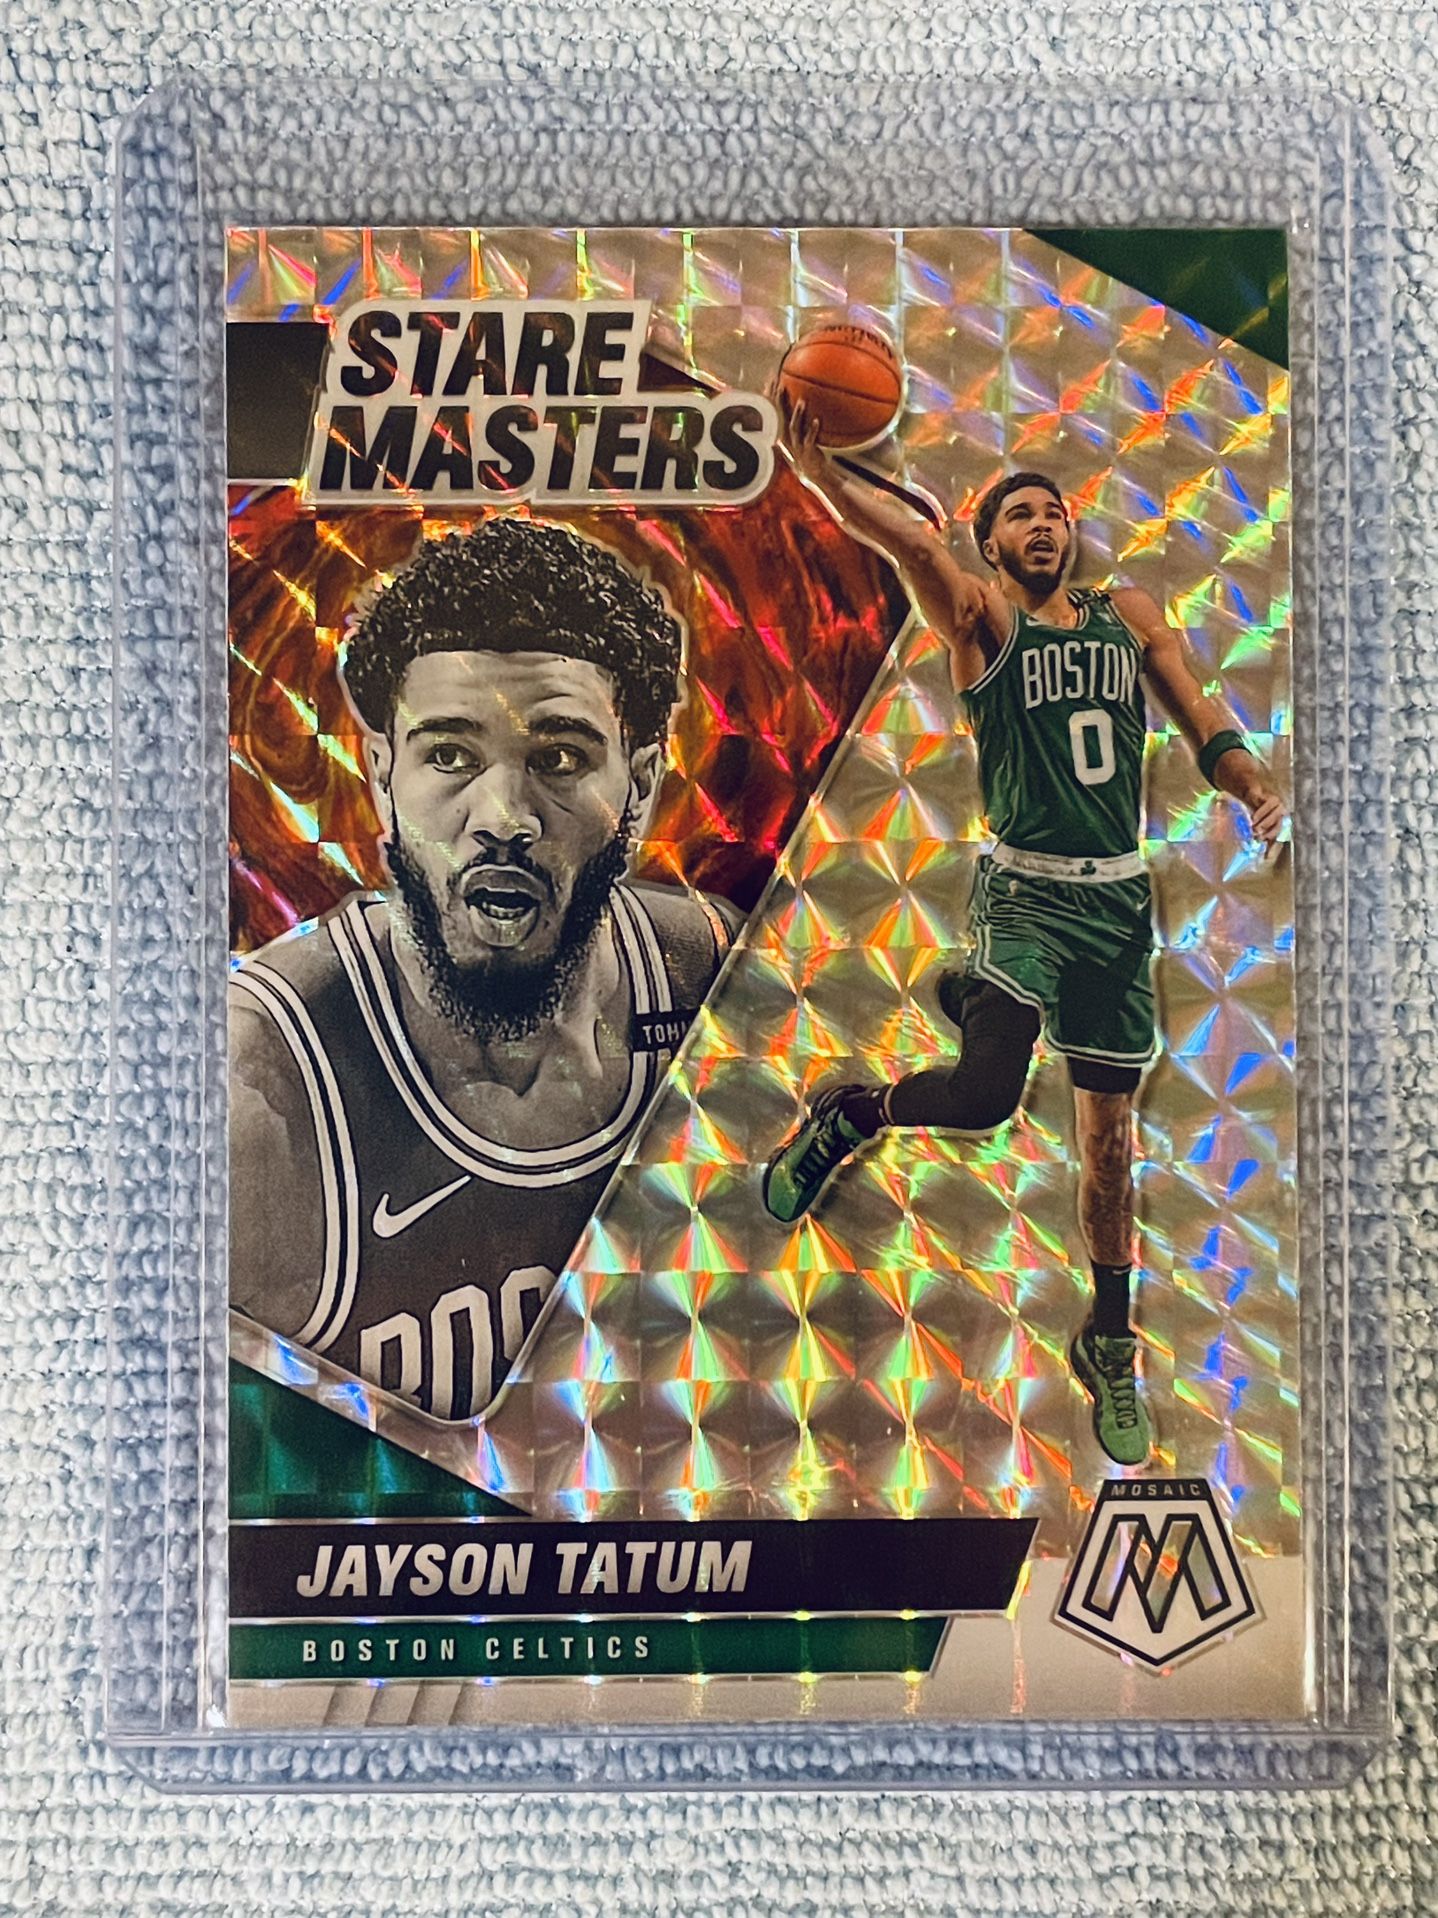 Jayson Tatum Celtics Nike Jersey Size Medium -XL for Sale in Boston, MA -  OfferUp